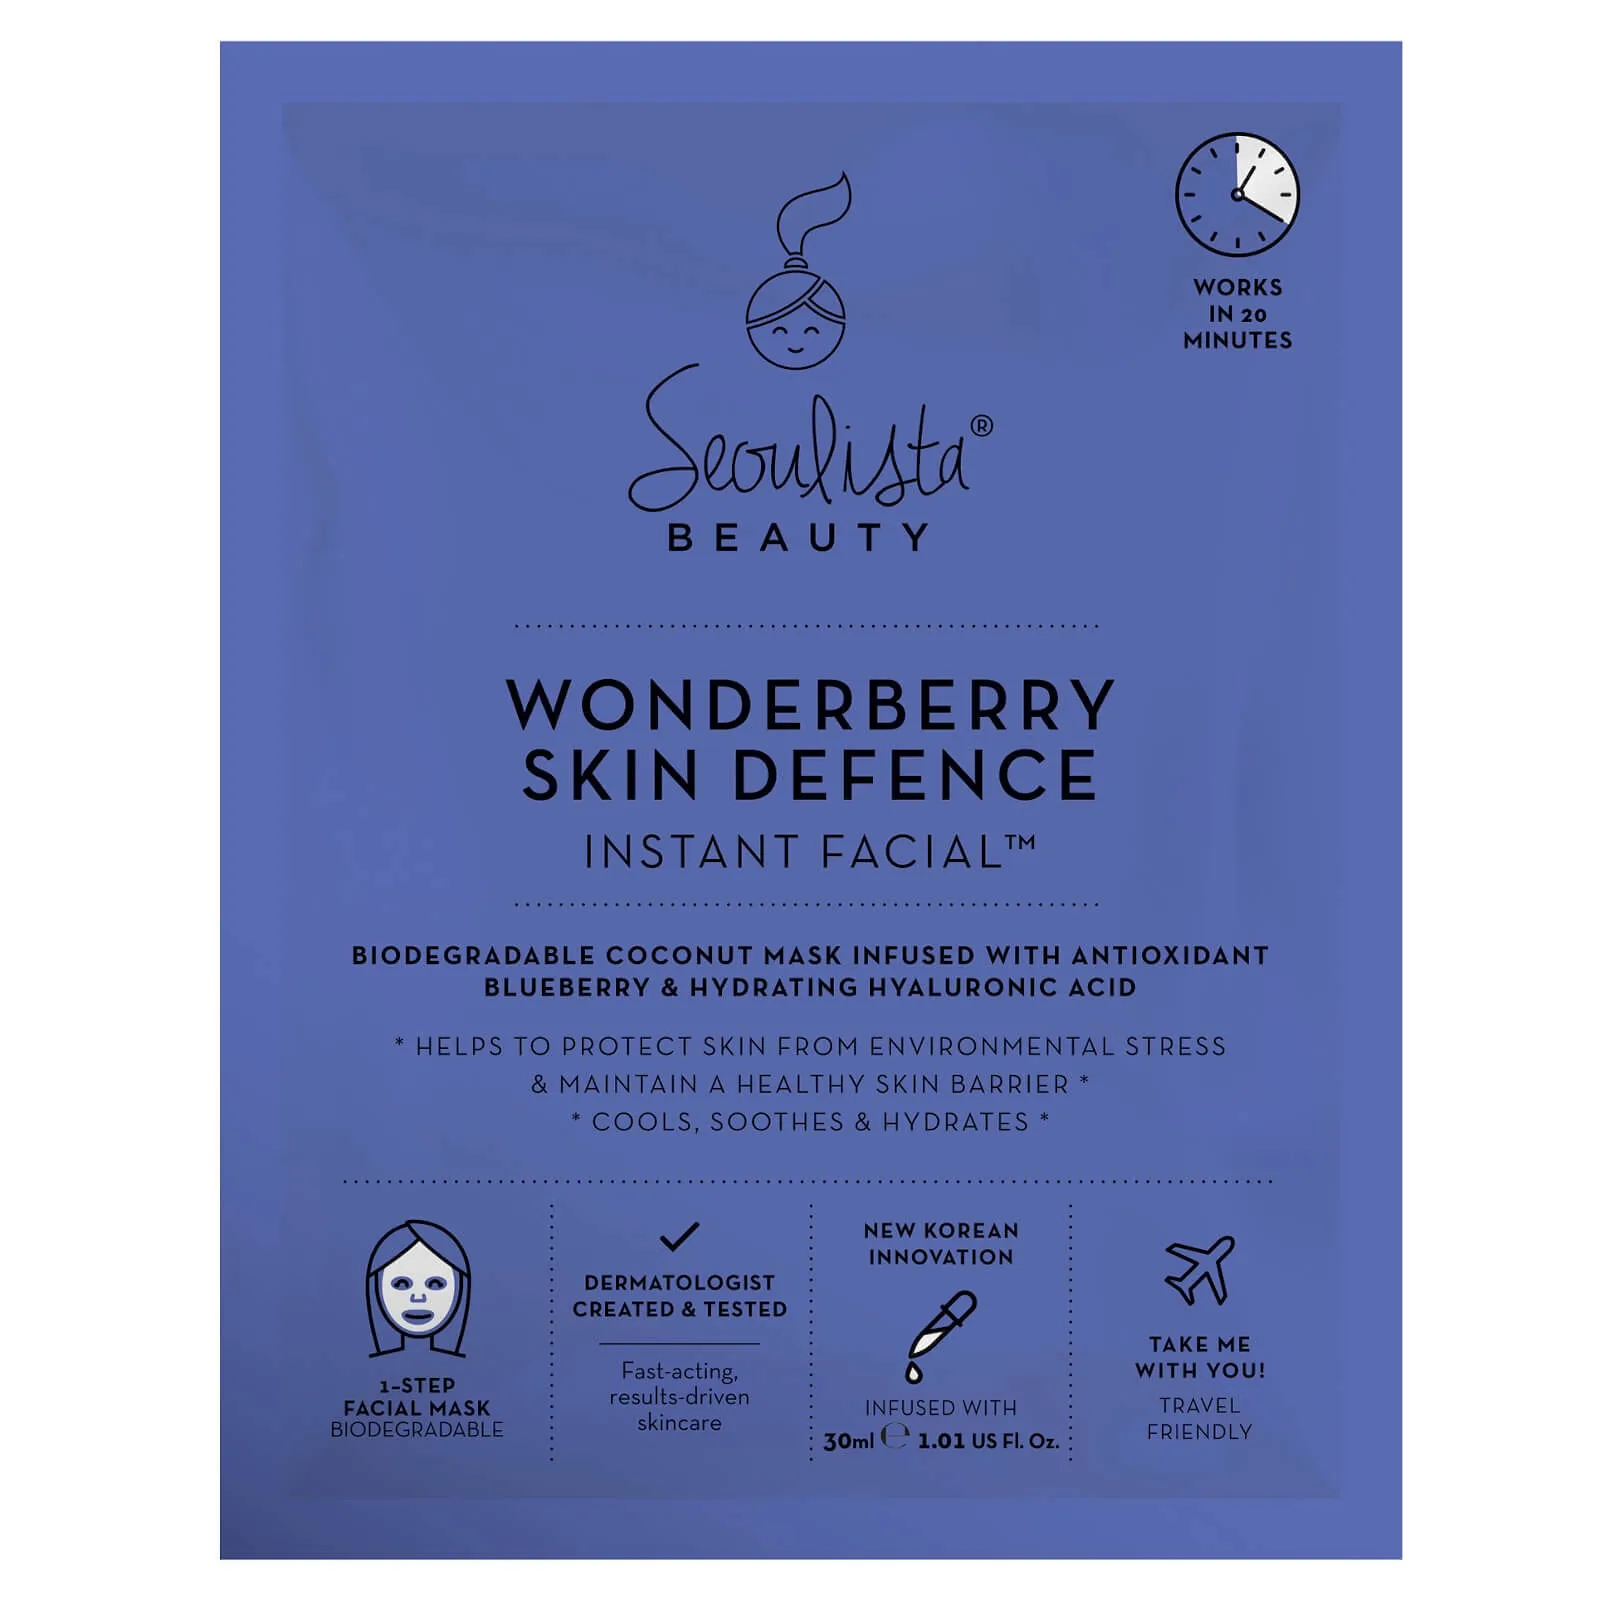 Seoulista Beauty Wonderberry Skin Defence